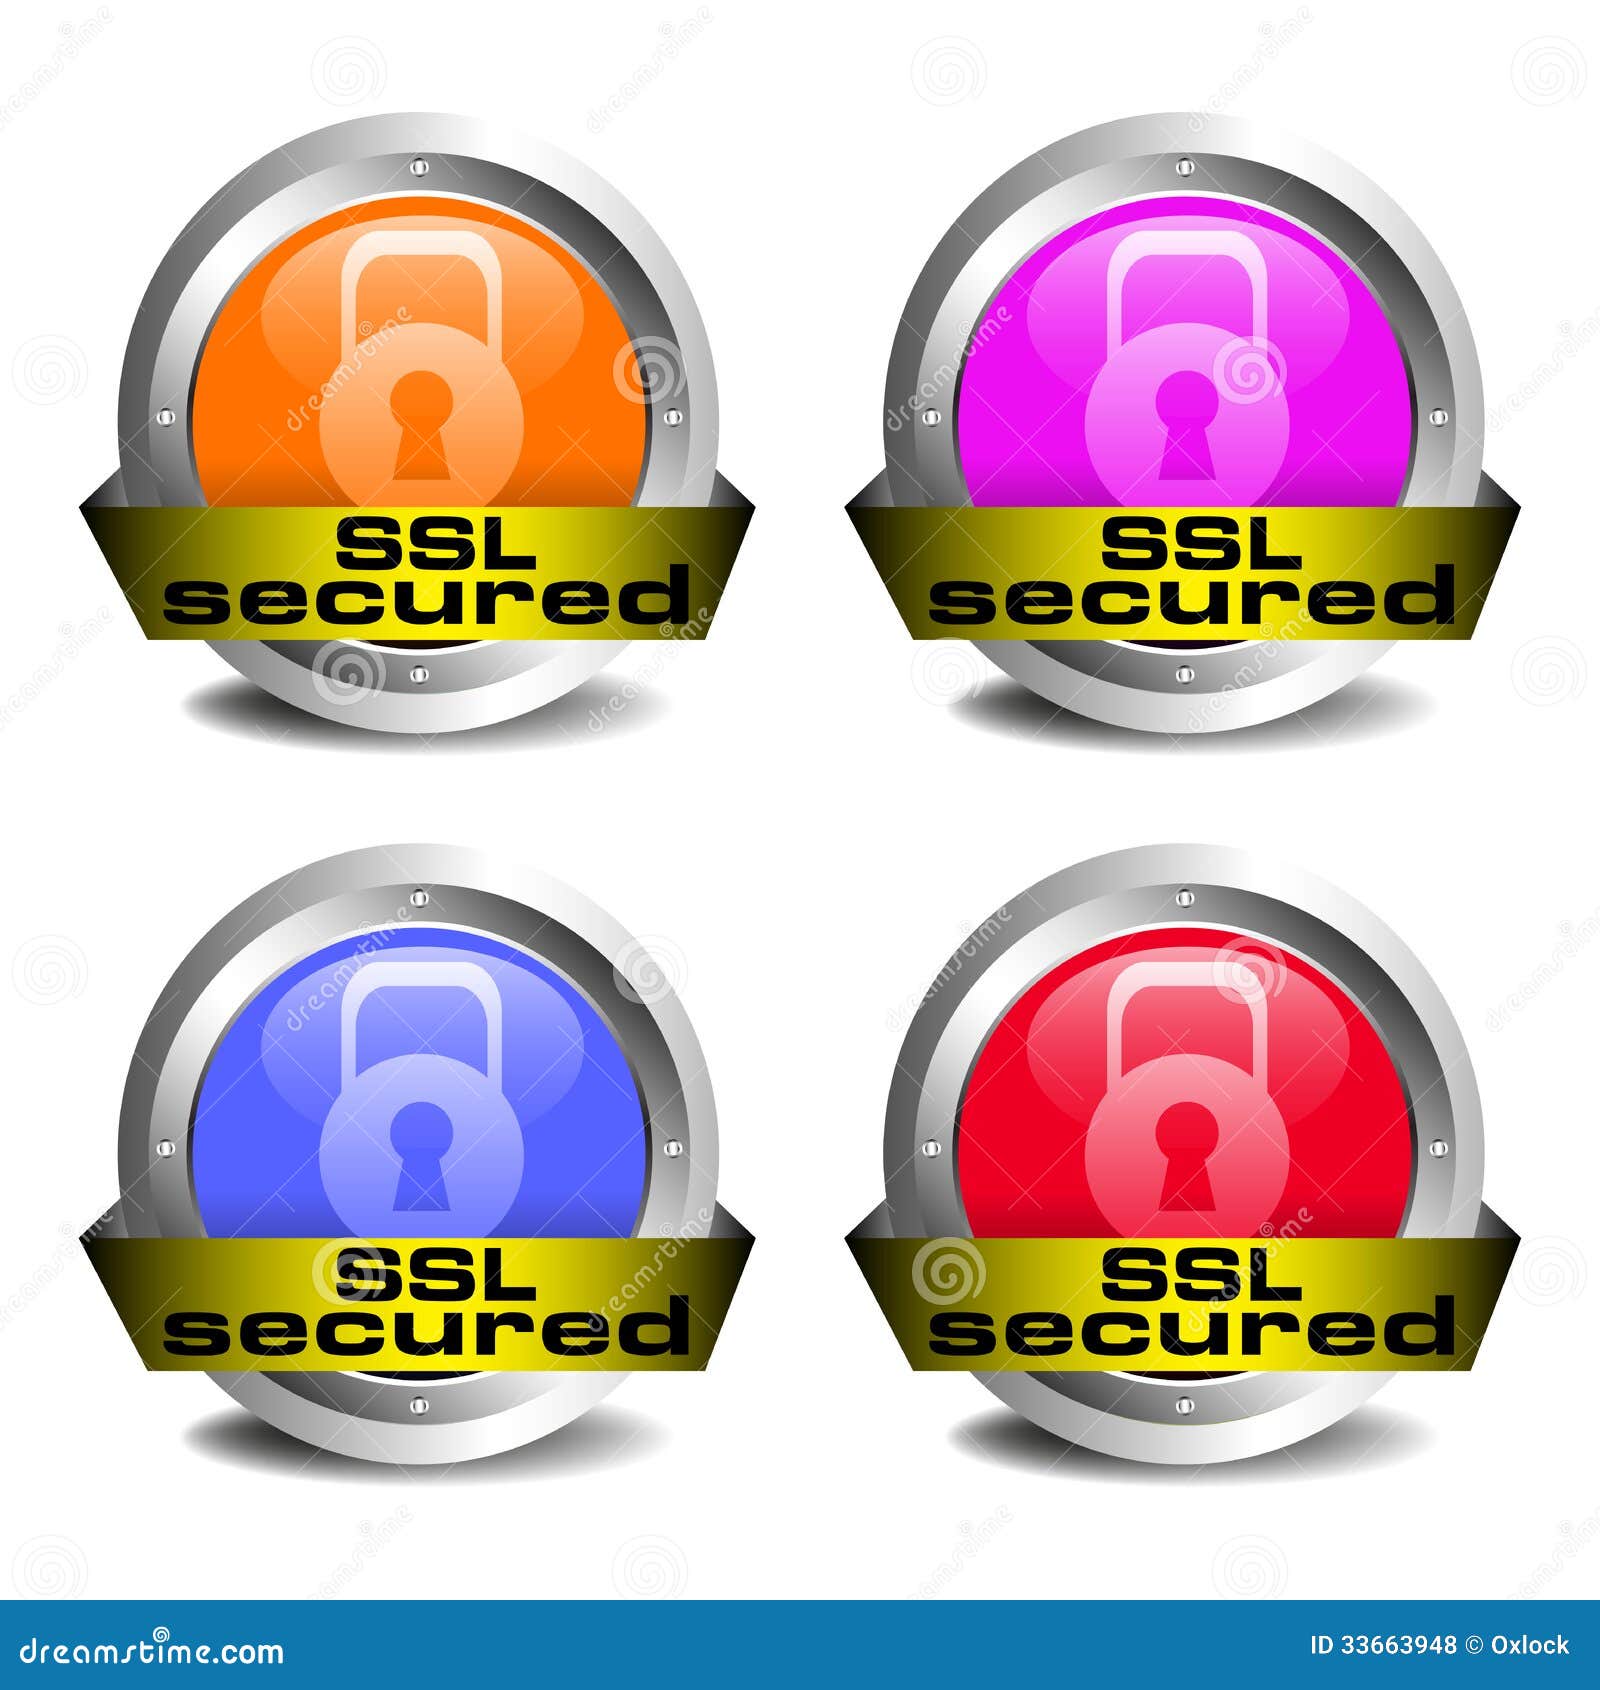 ssl secured icon set